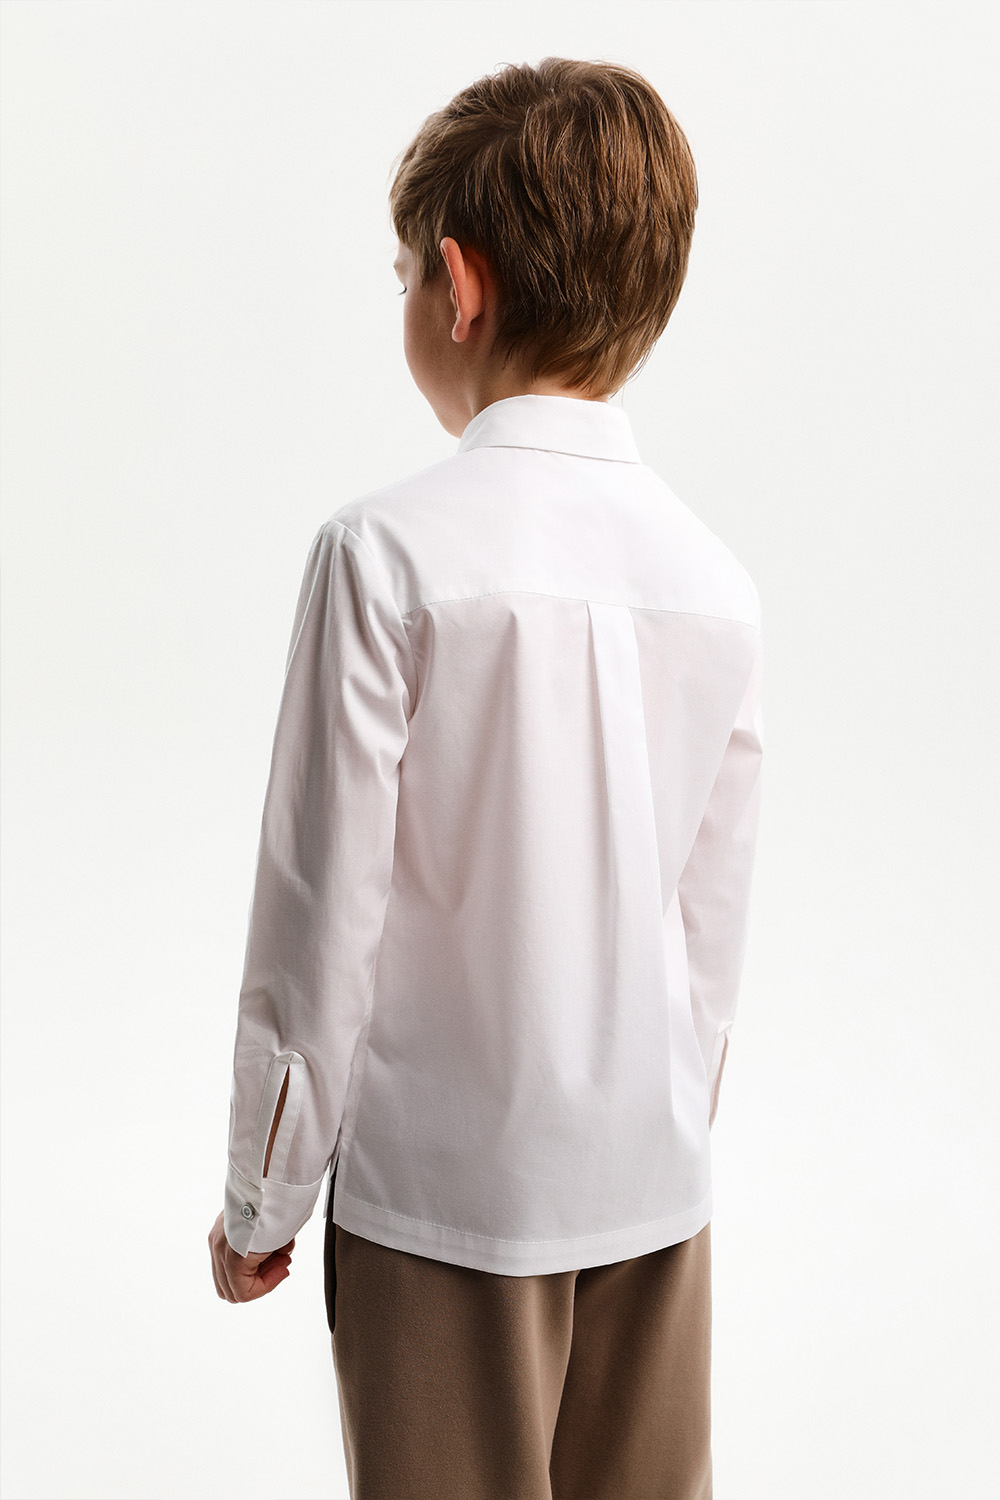 Хлопковая сорочка на кнопках (SSLWB-329-14753-200) Silver Spoon